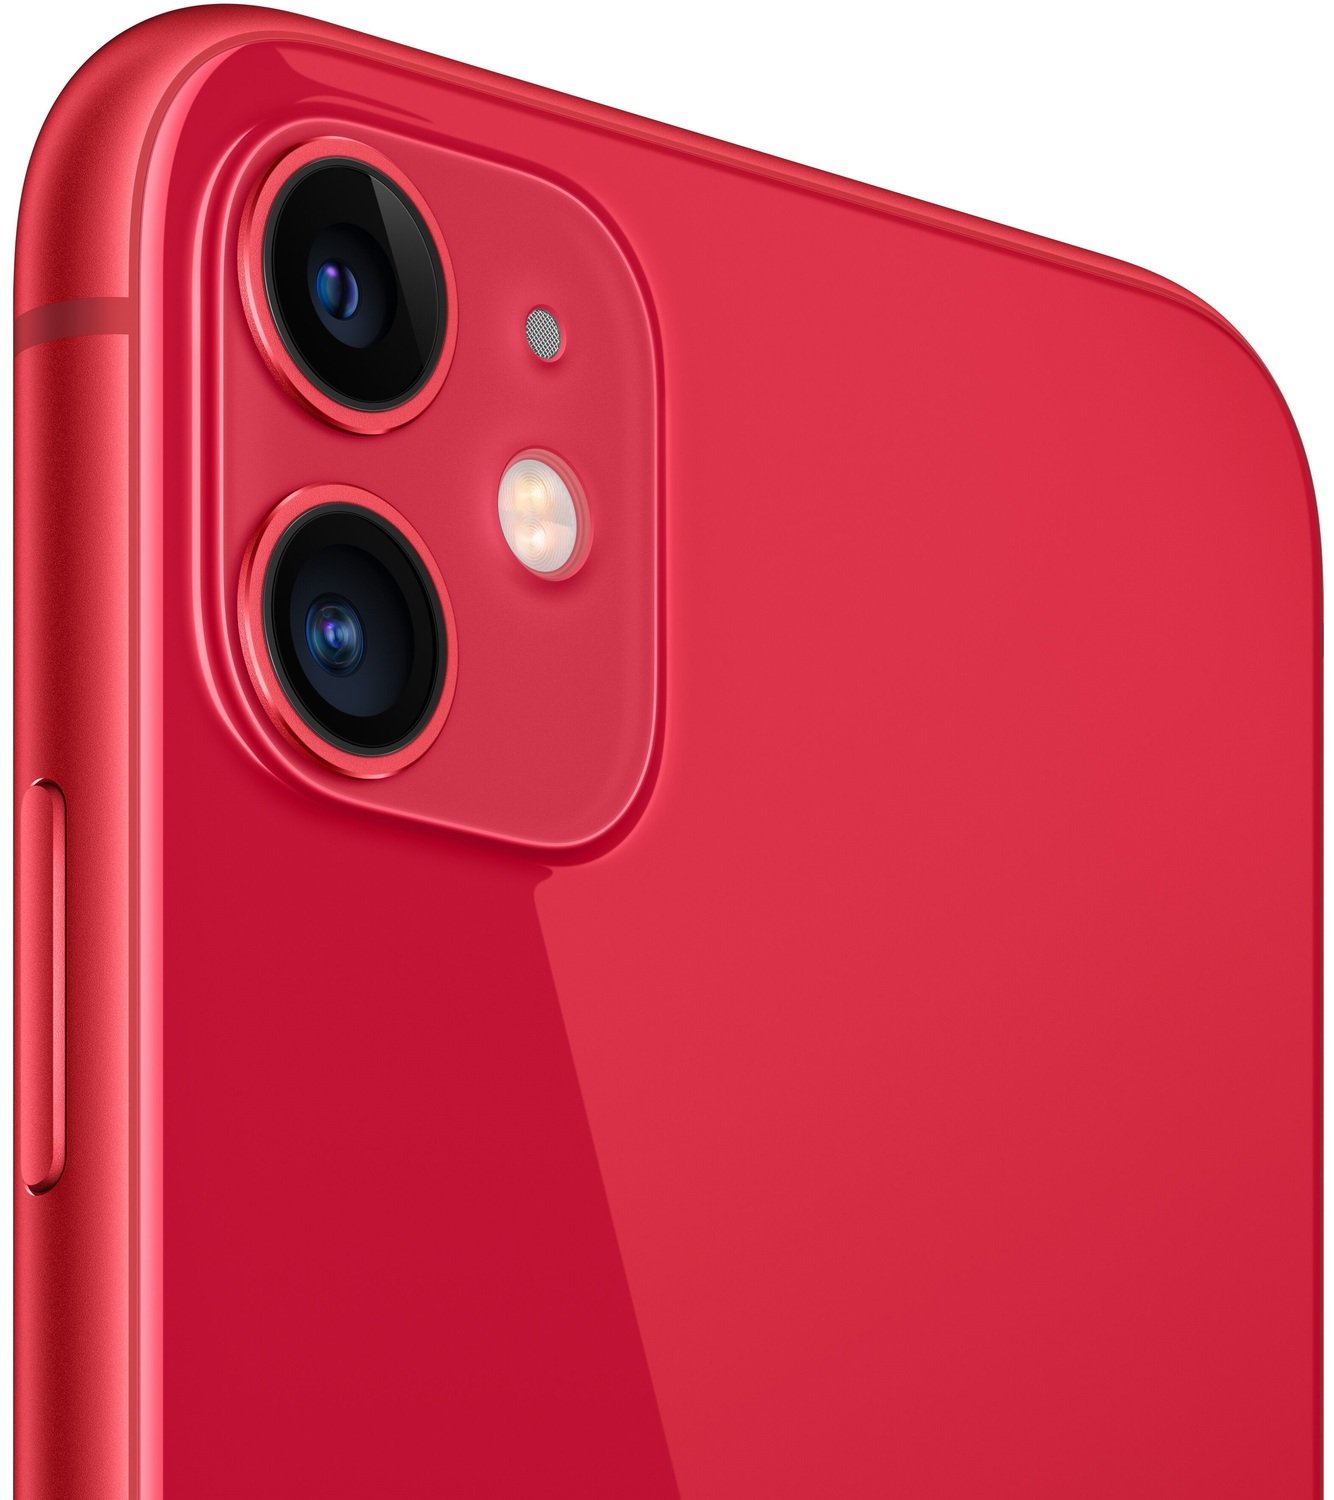 Смартфон Apple iPhone 11 64GB (PRODUCT) RED (slim box) (MHDD3)фото